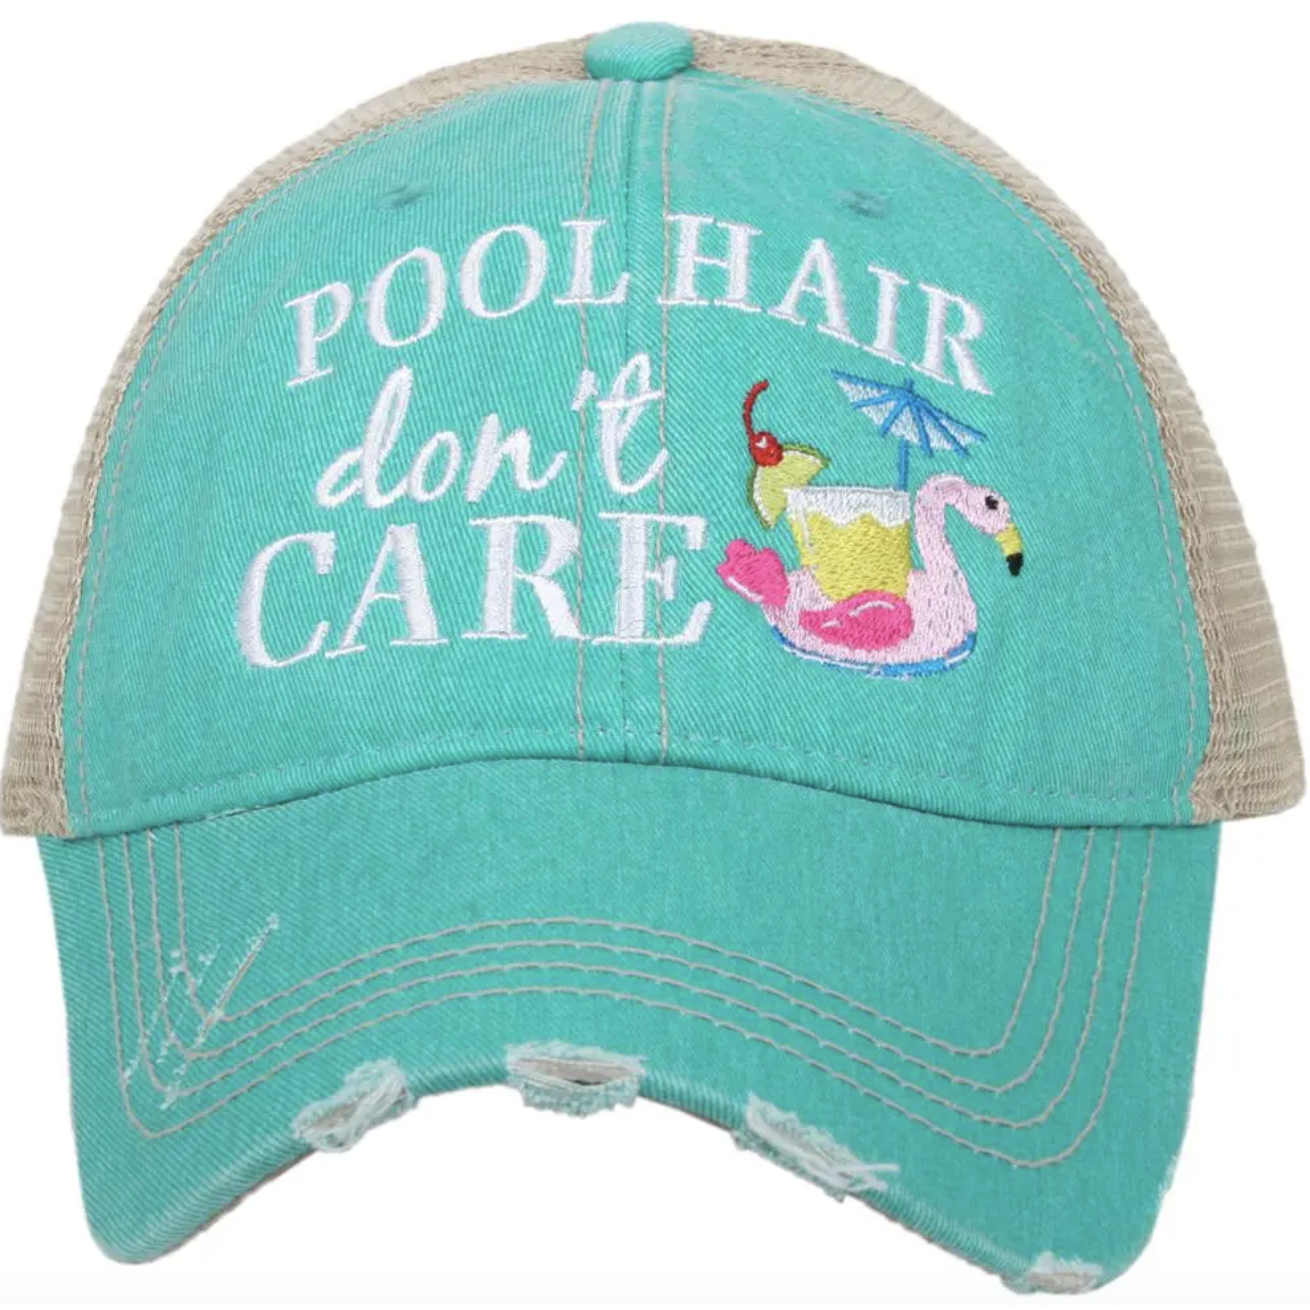 Pool Hair Don't Care Trucker Hat by Katydid